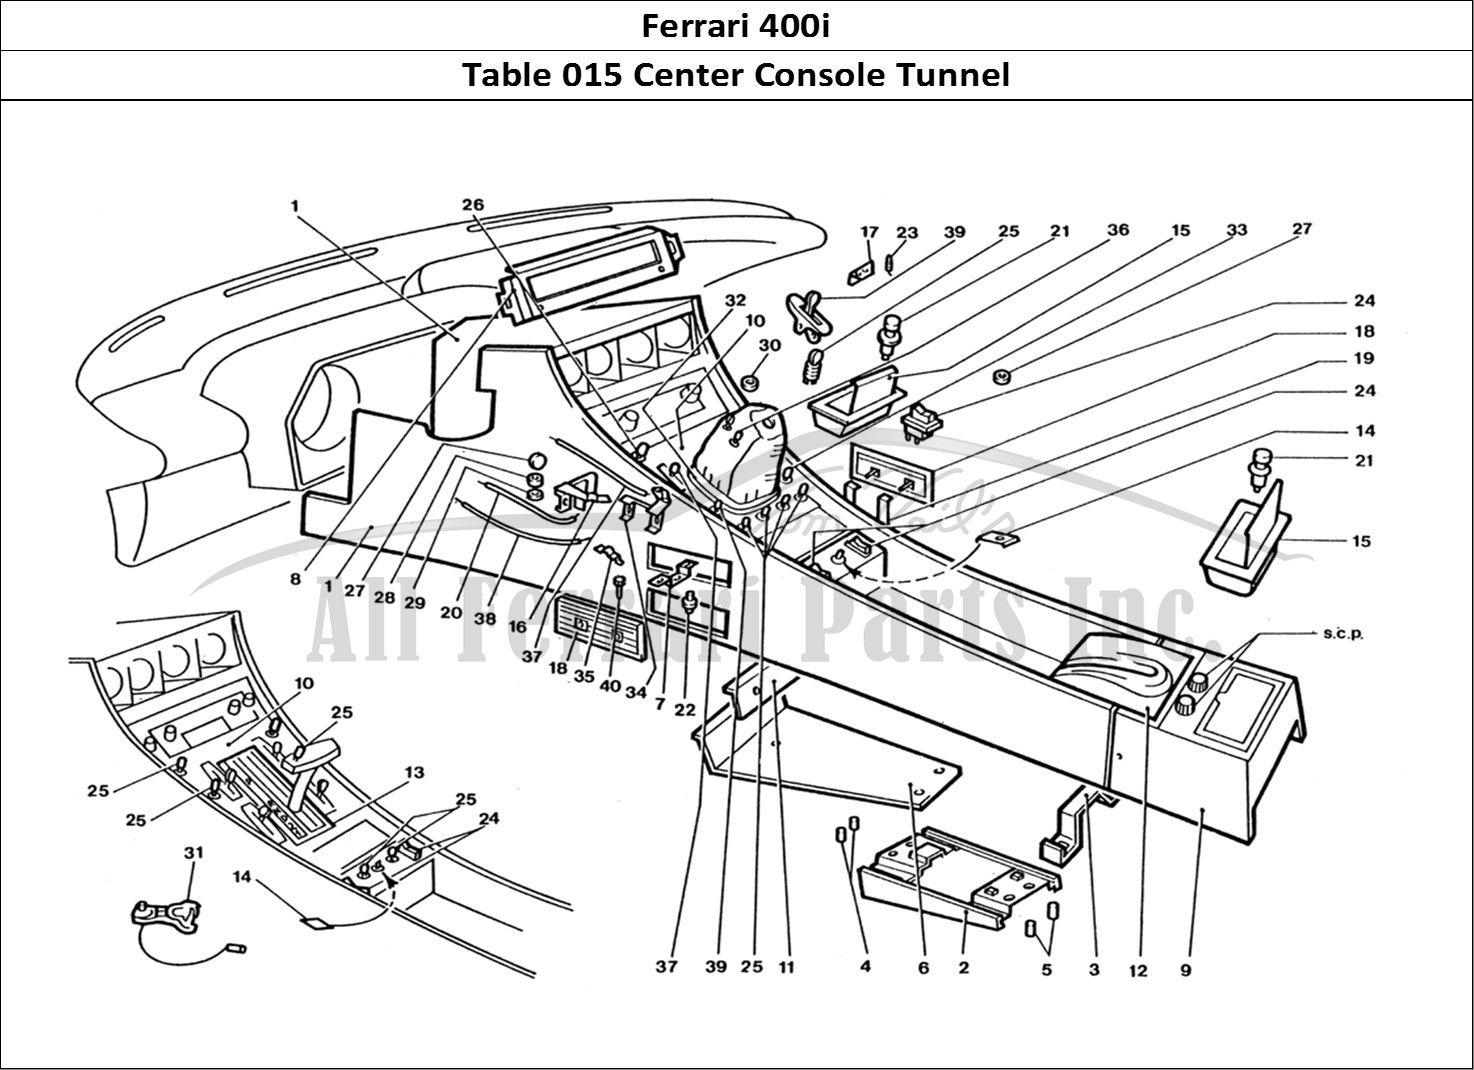 Ferrari Parts Ferrari 400 GT (Coachwork) Page 015 Inner Switches & Trims